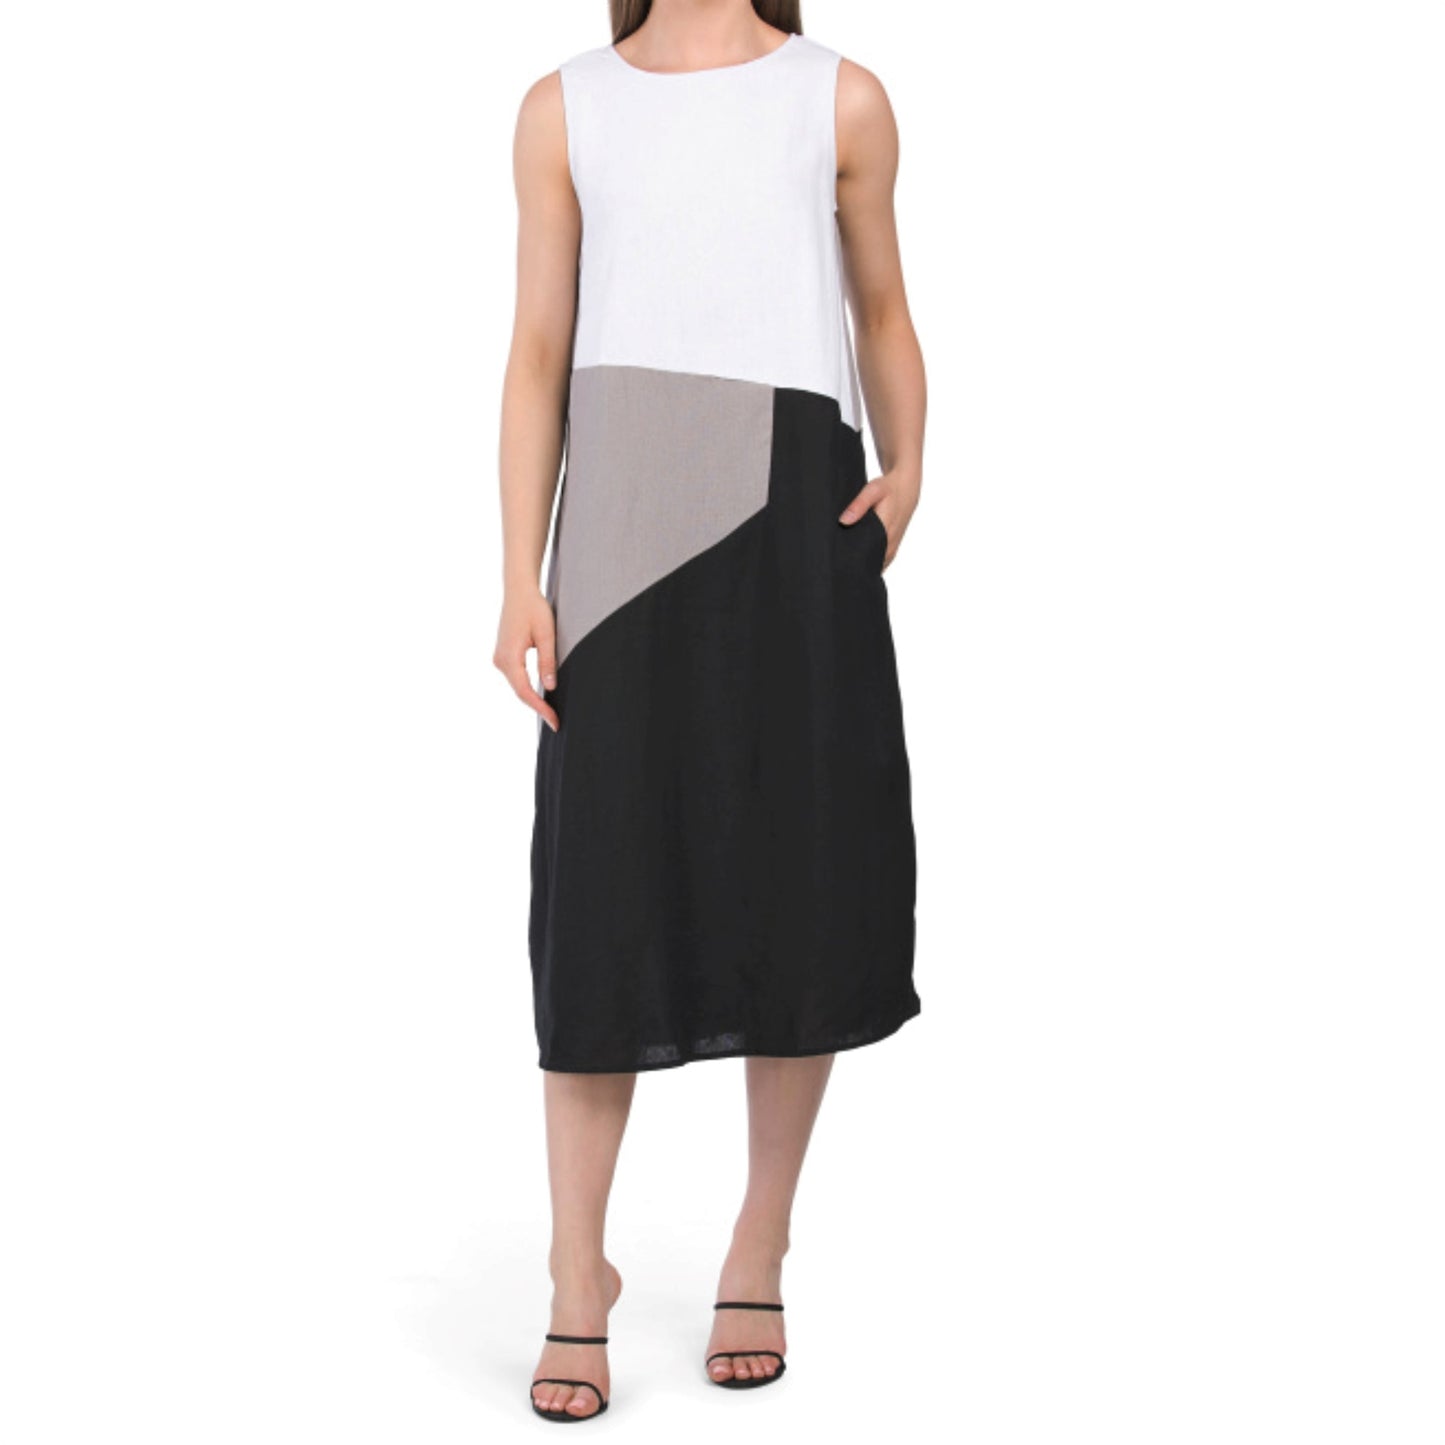 FORCYNTHIA Women's Linen Blend Colorblock Sleeveless Midi Dress